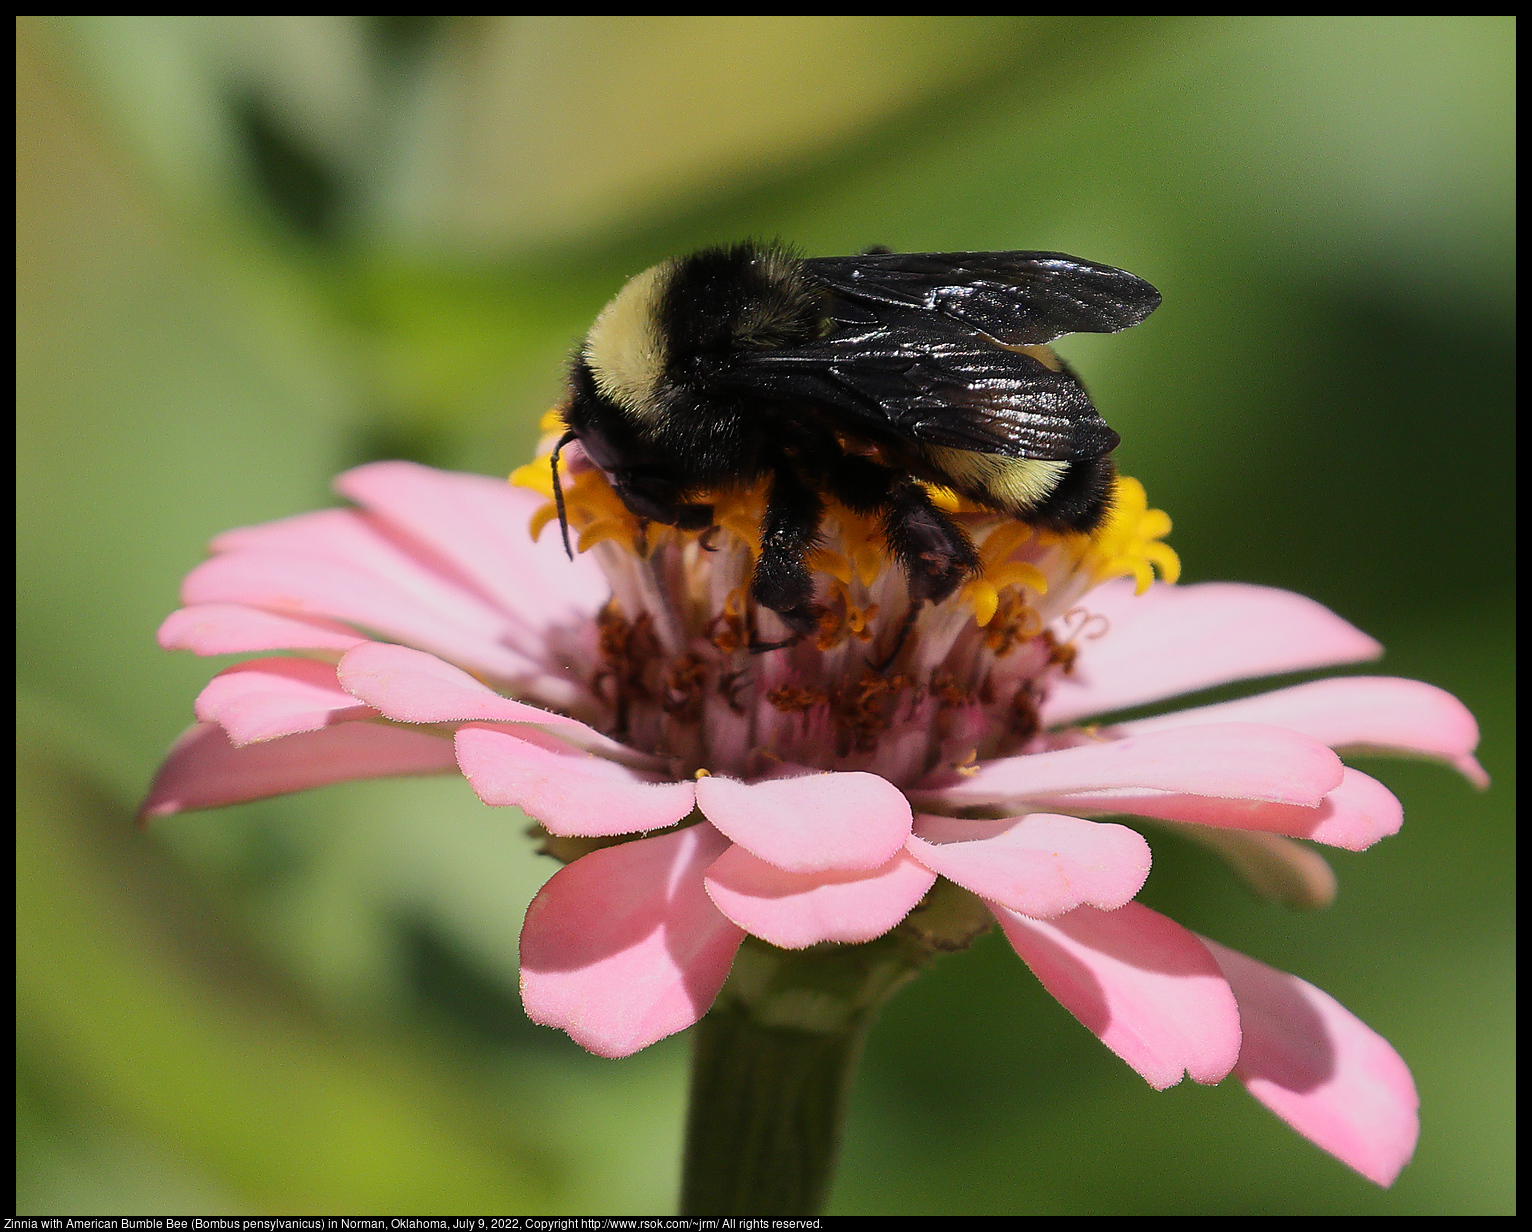 Zinnia with American Bumble Bee (Bombus pensylvanicus) in Norman, Oklahoma, July 9, 2022